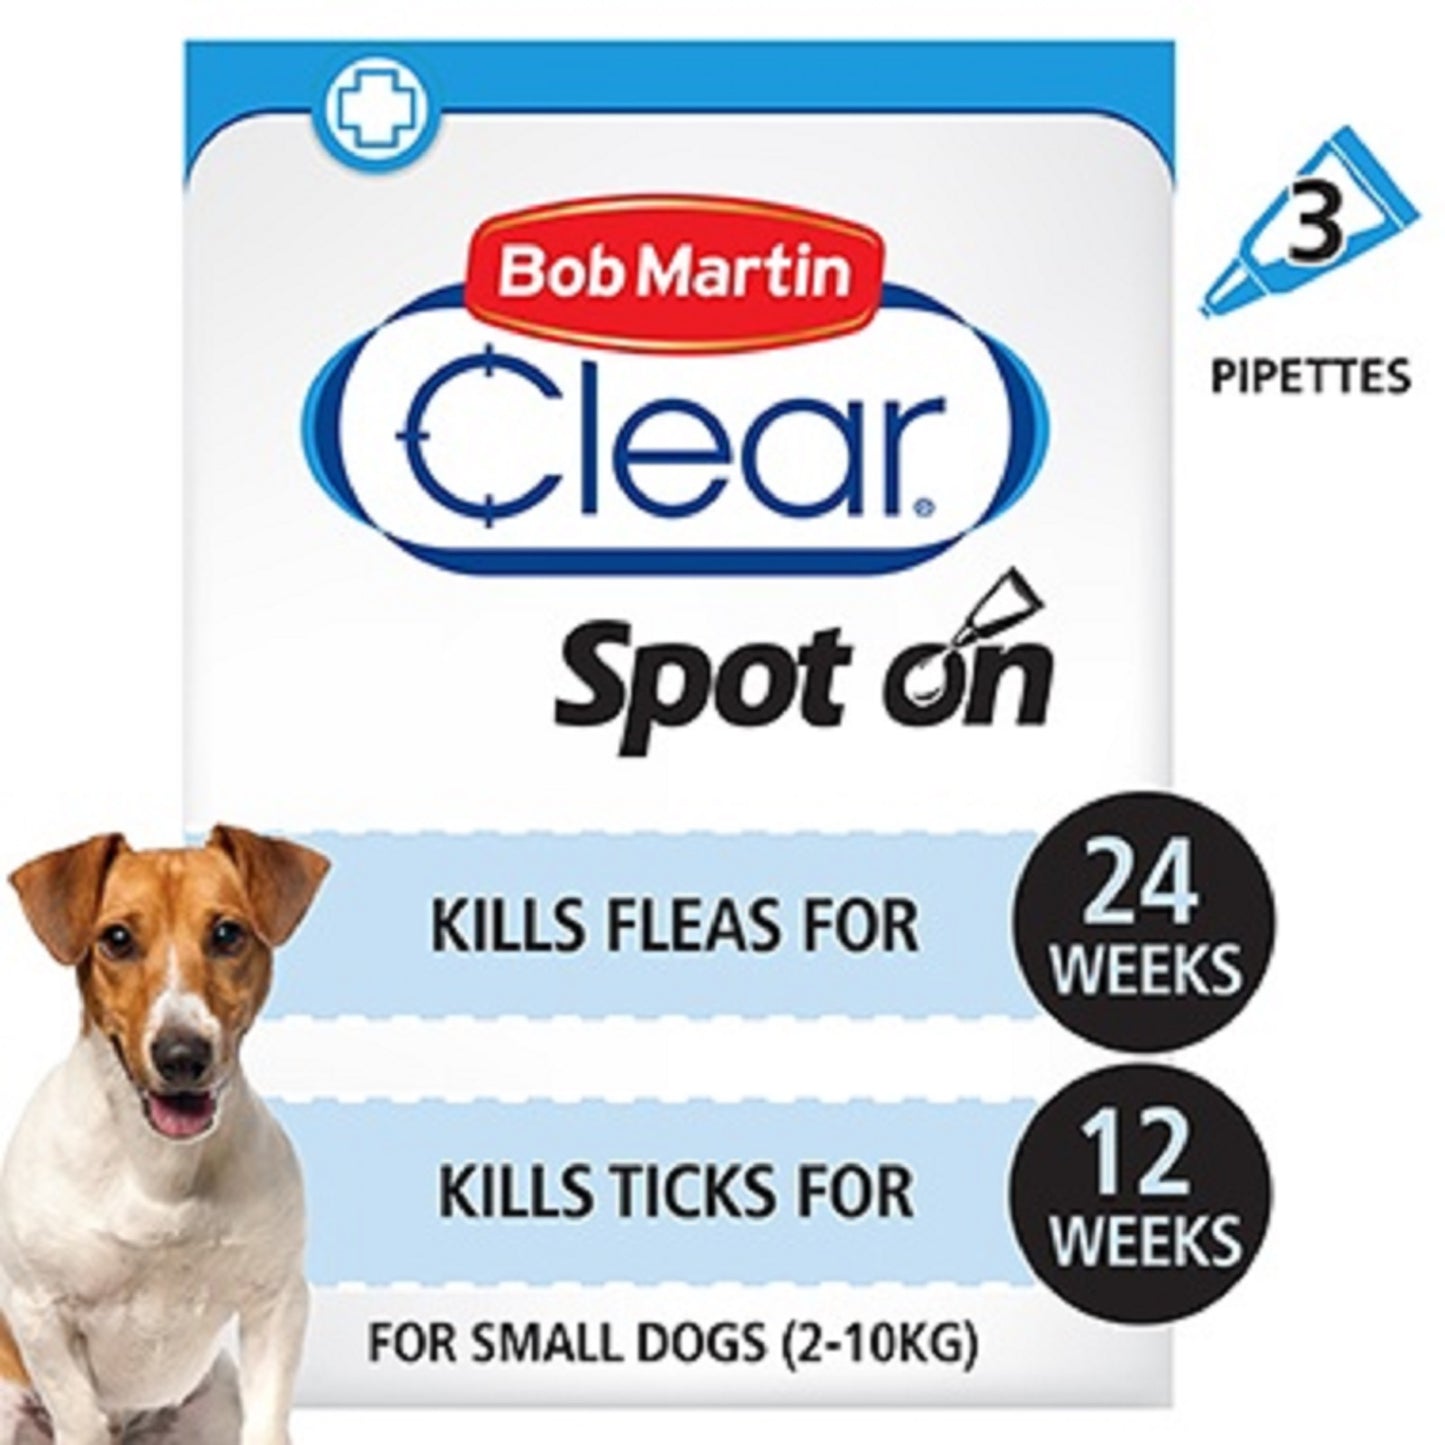 Bob Martin - Flea Clear Spot on